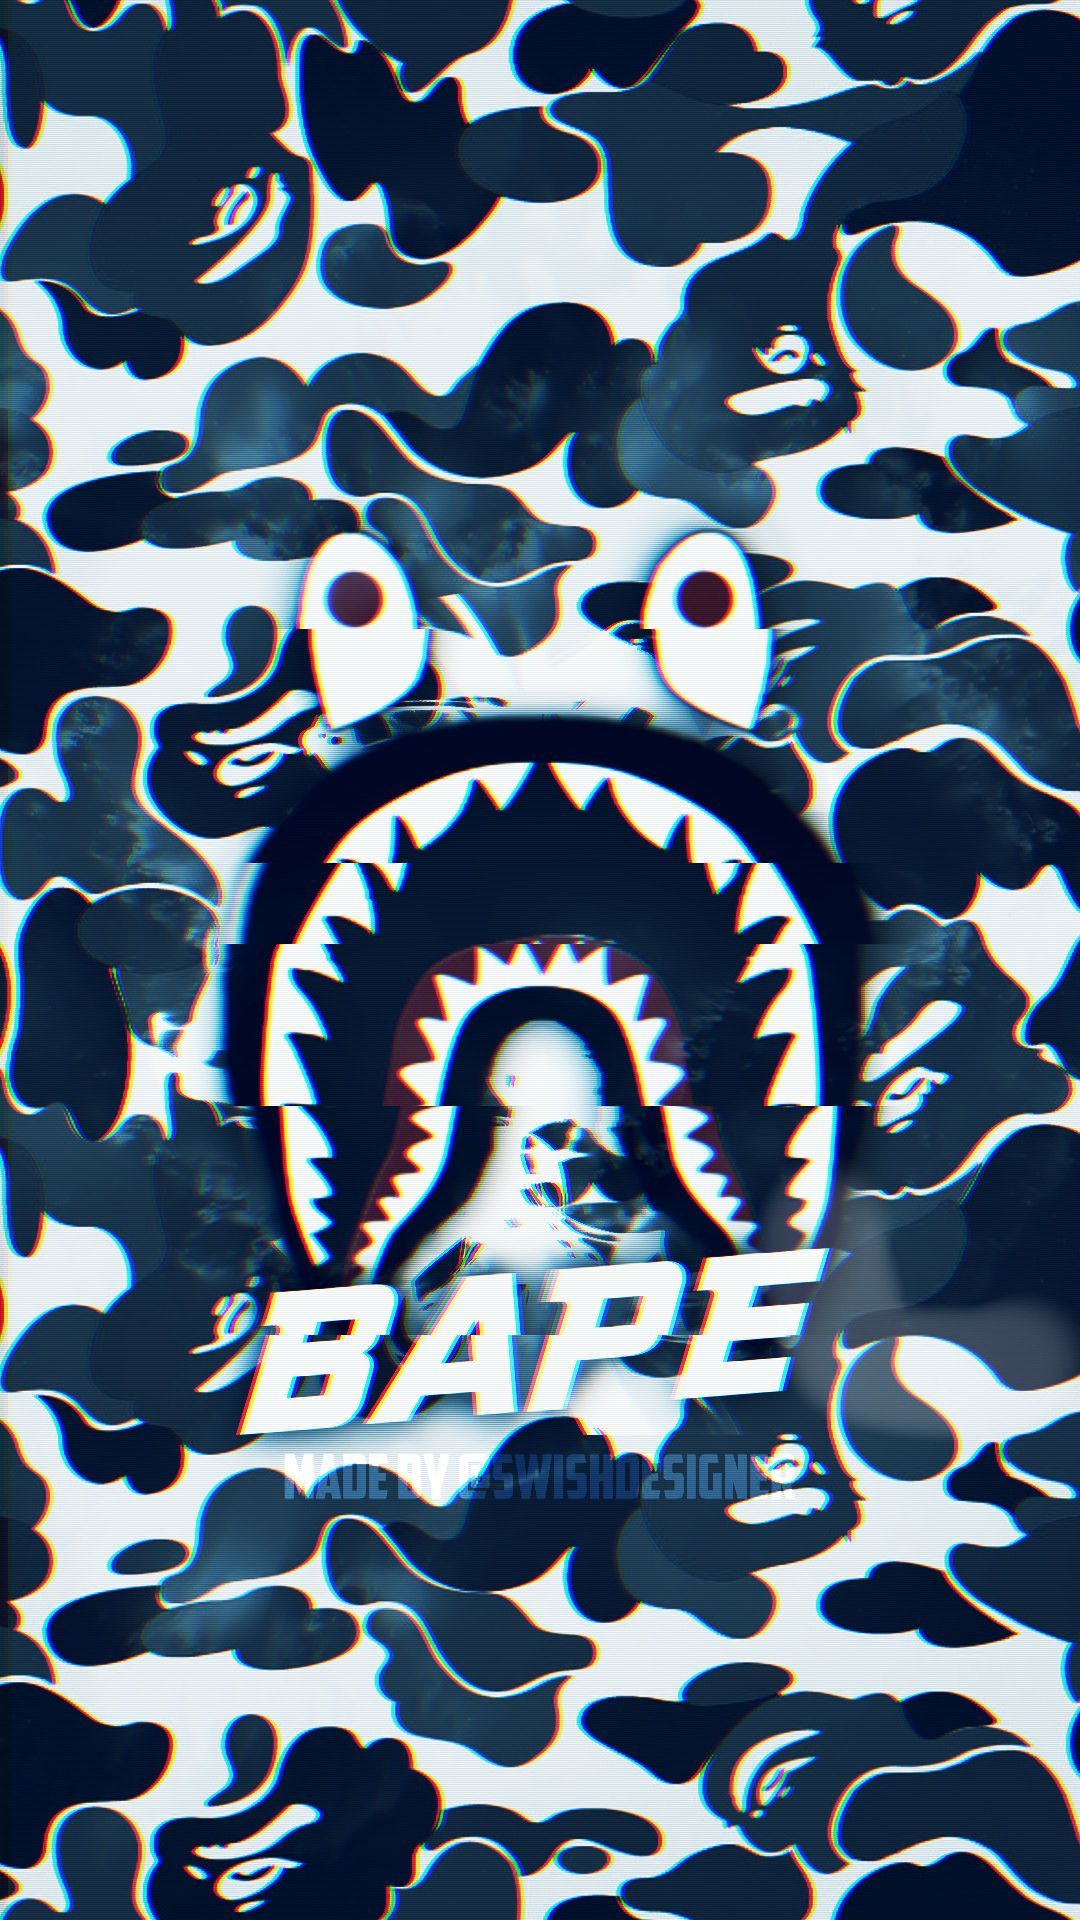 Bape Shark Phone Wallpaper On